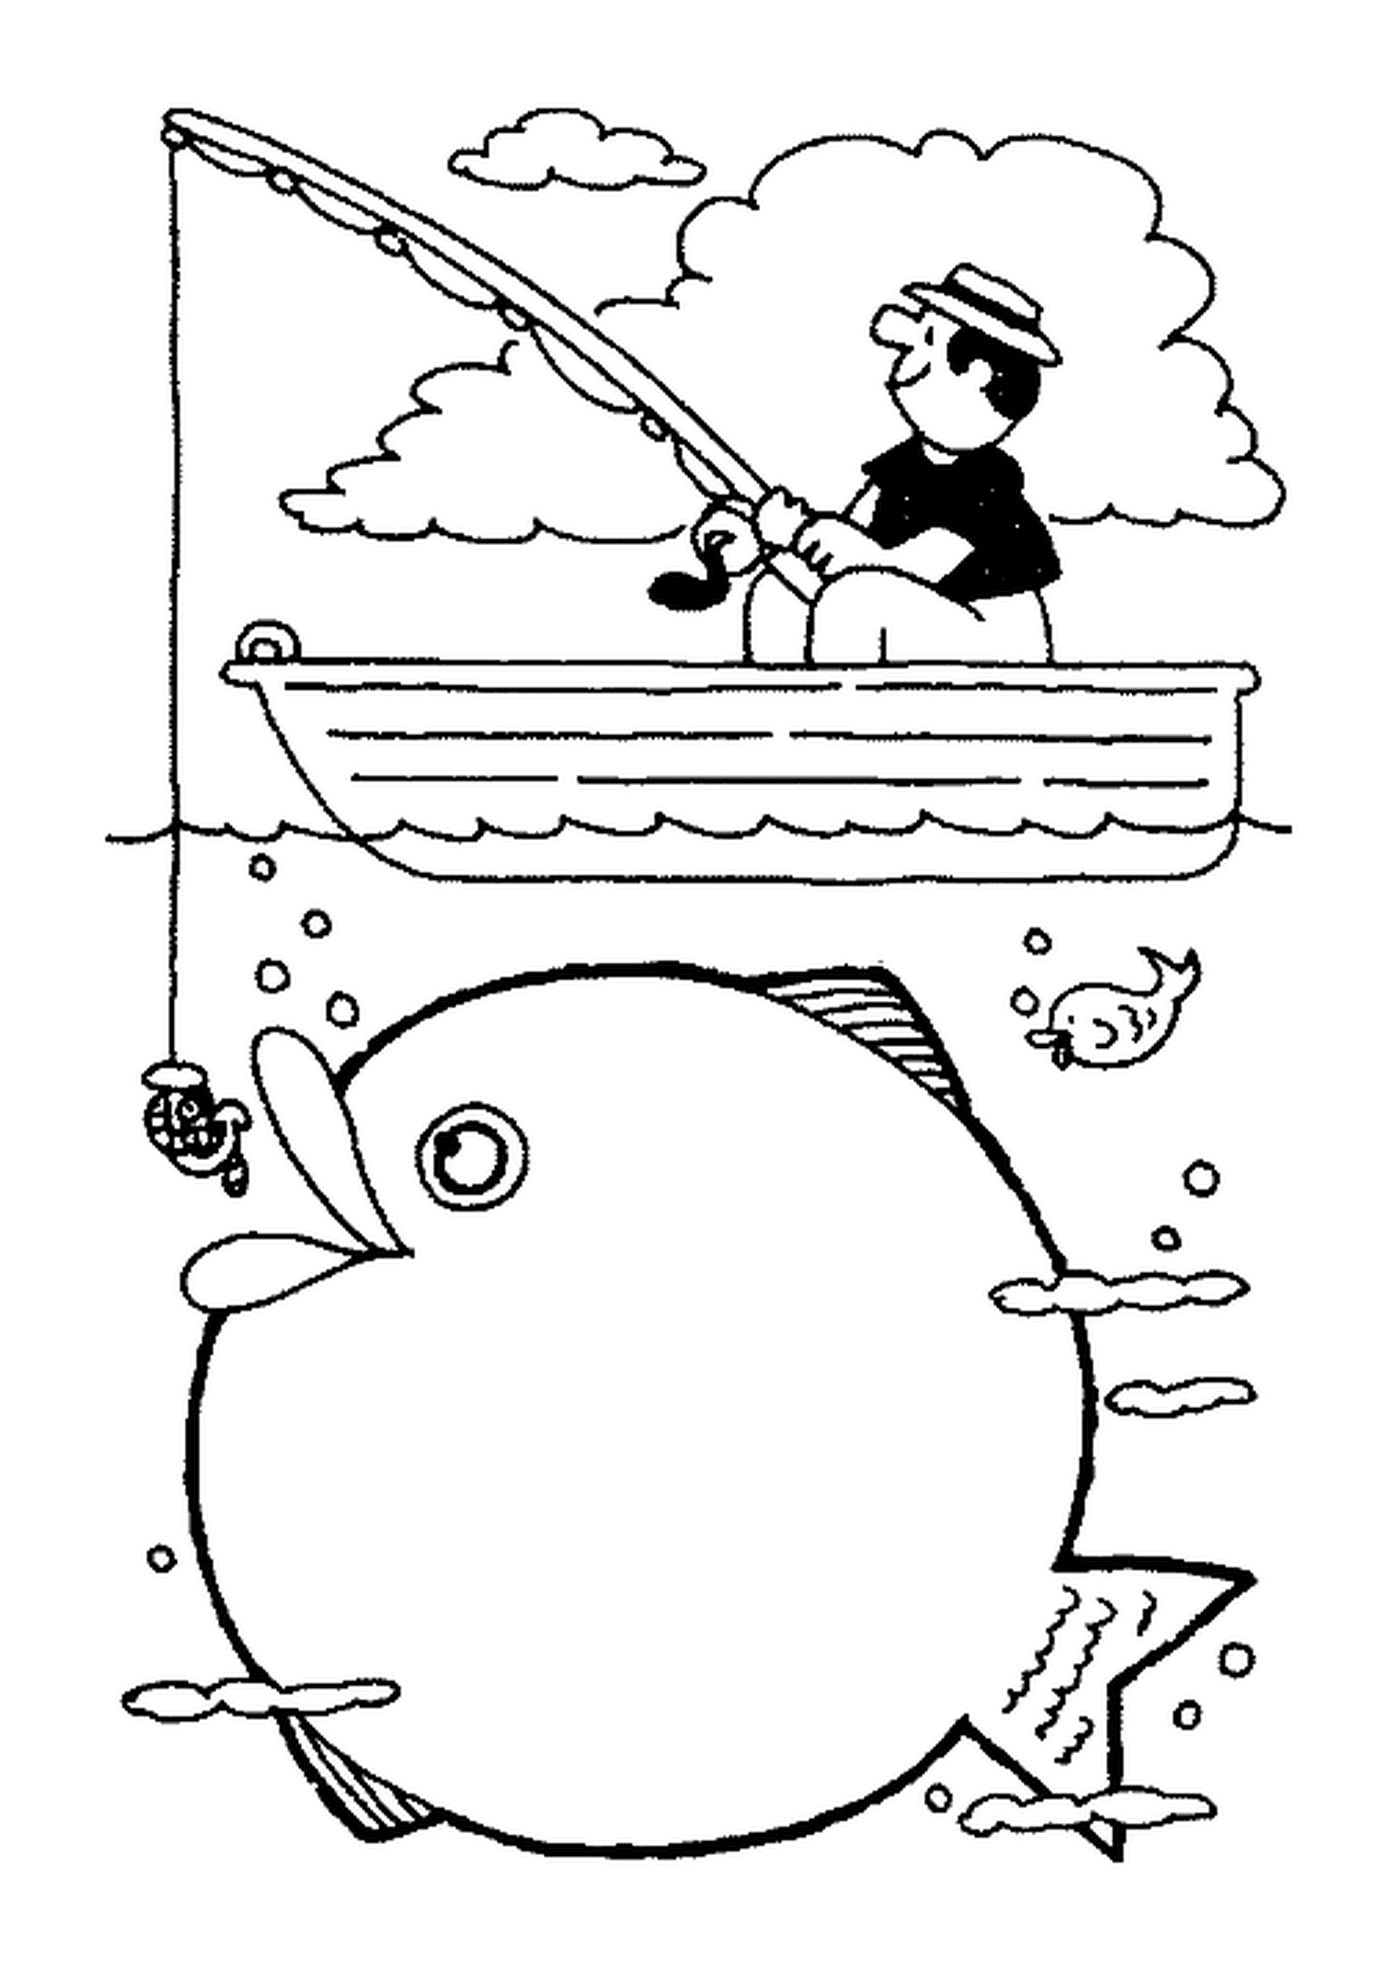  Man fishing in a boat 